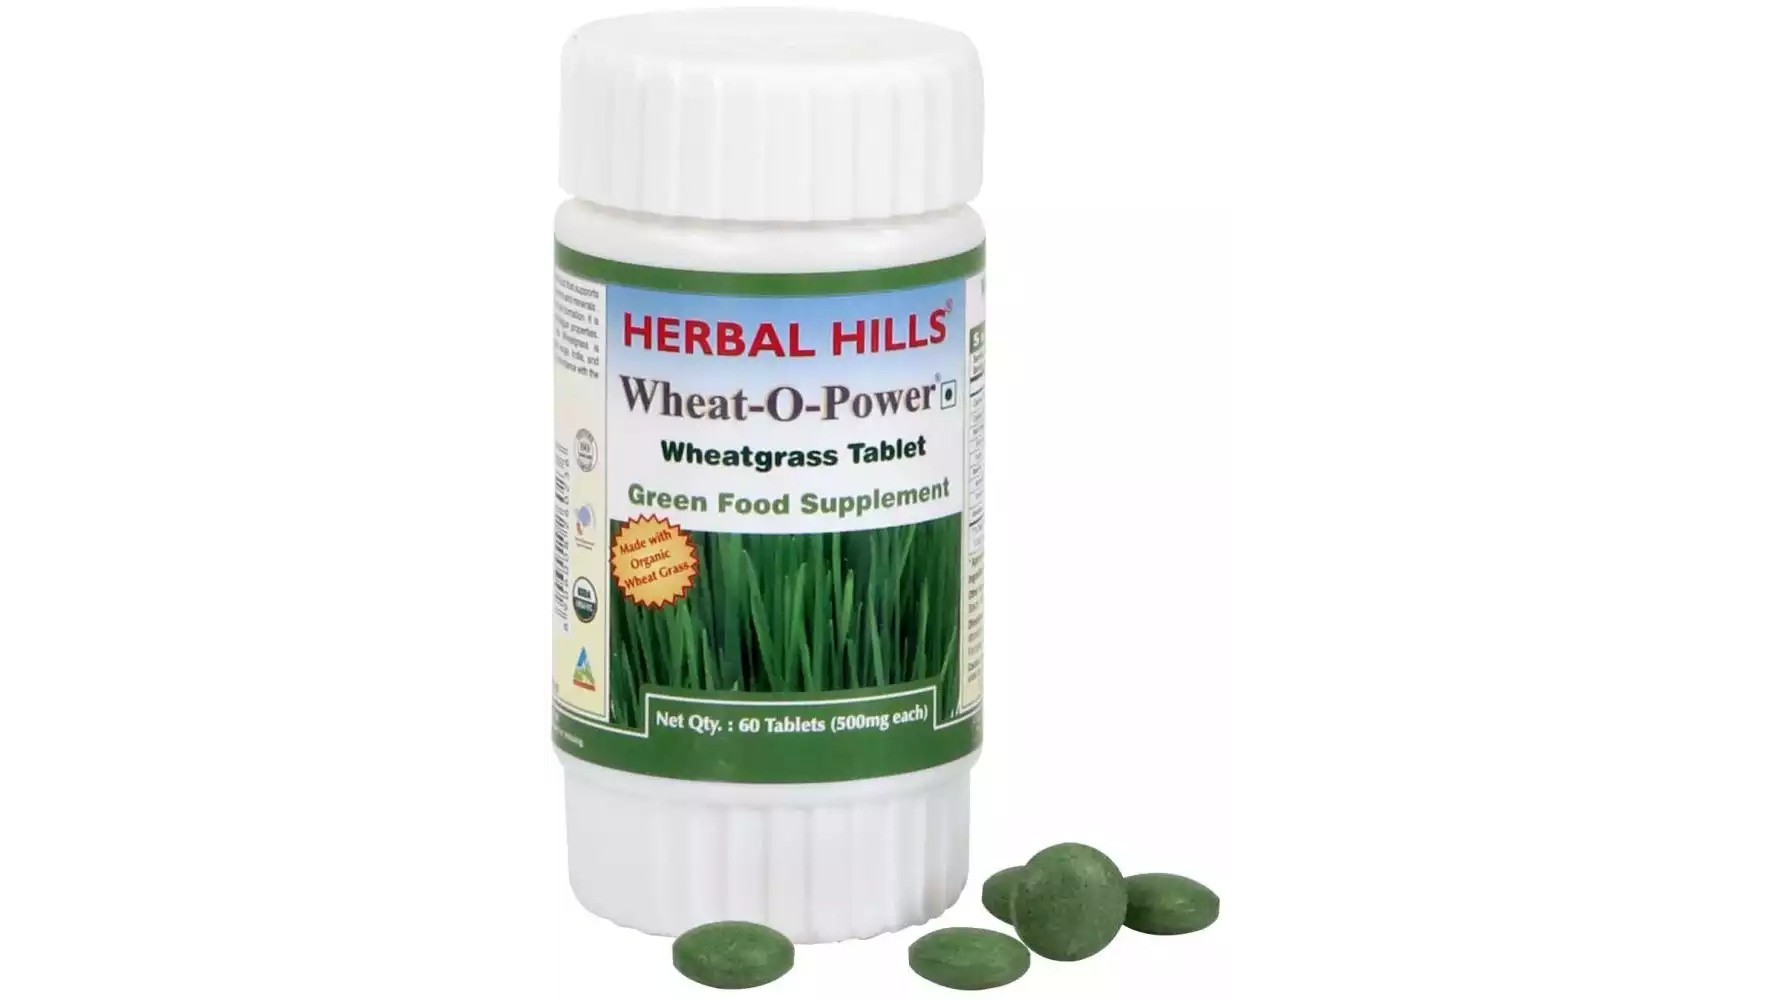 Herbal Hills Wheat-O-Power Tablet (60tab)